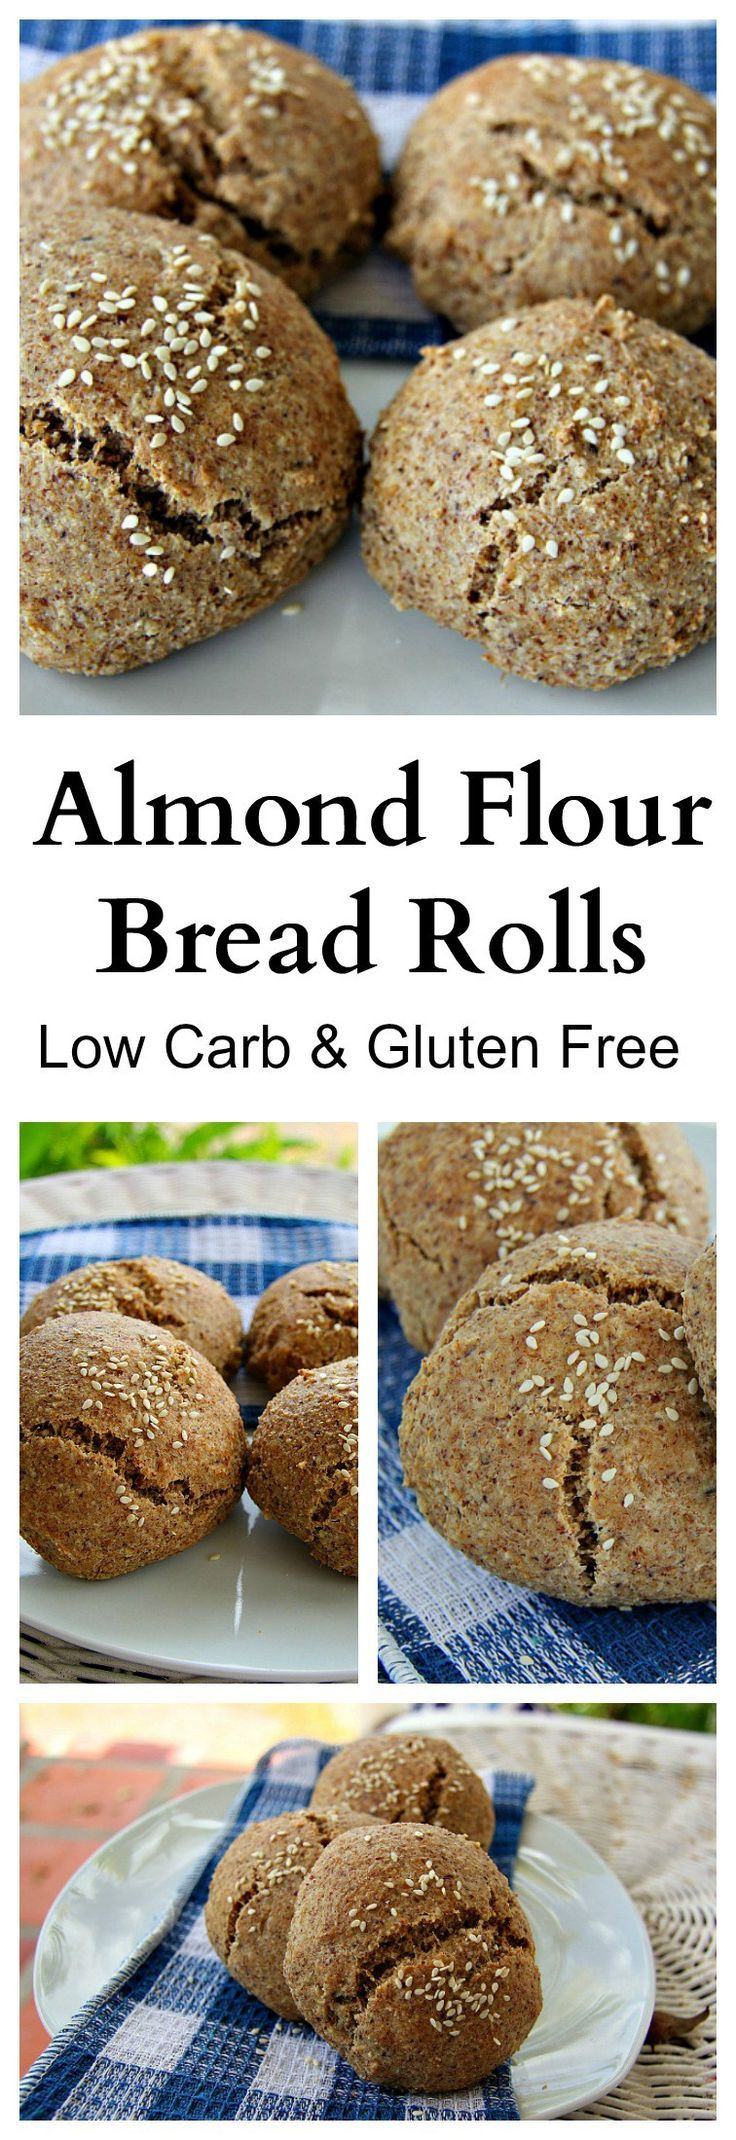 Keto Bread Rolls Almond Flour
 Almond Flour Bread Rolls Recipe